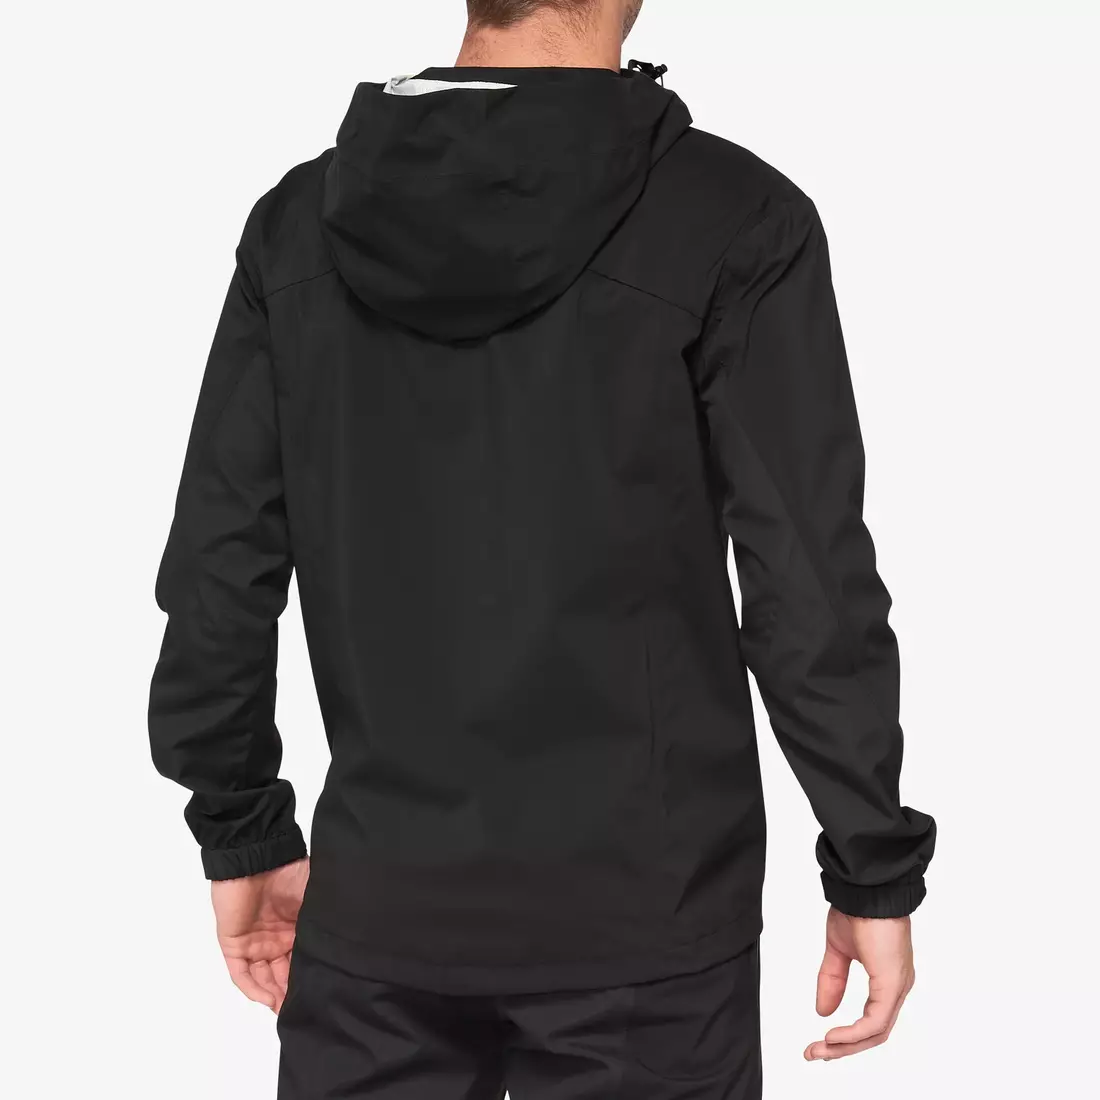 100% HYDROMATIC Jacket Black men's cycling rain jacket, black